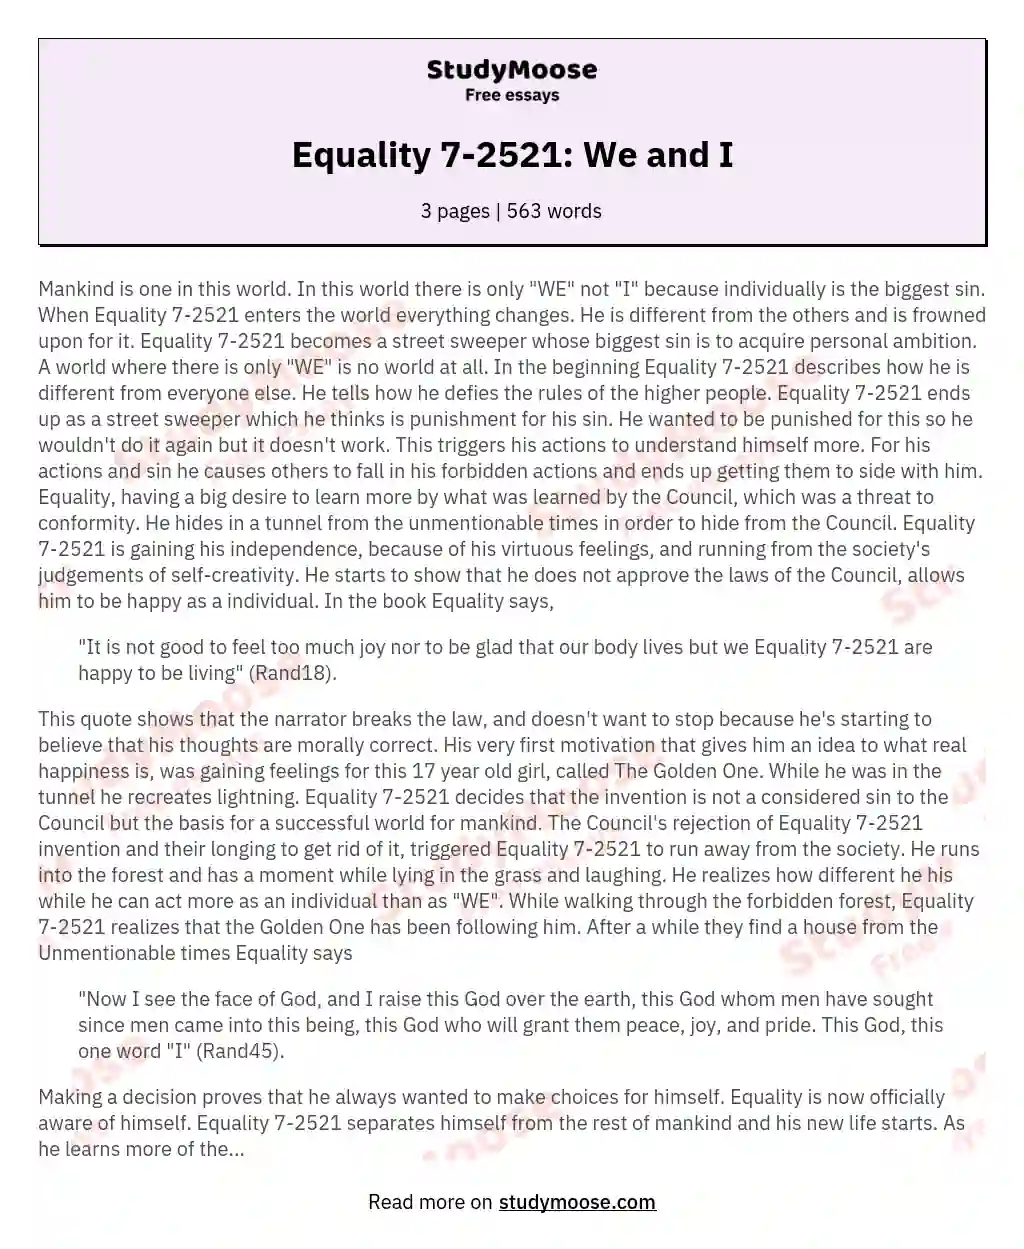 Equality 7-2521: We and I essay